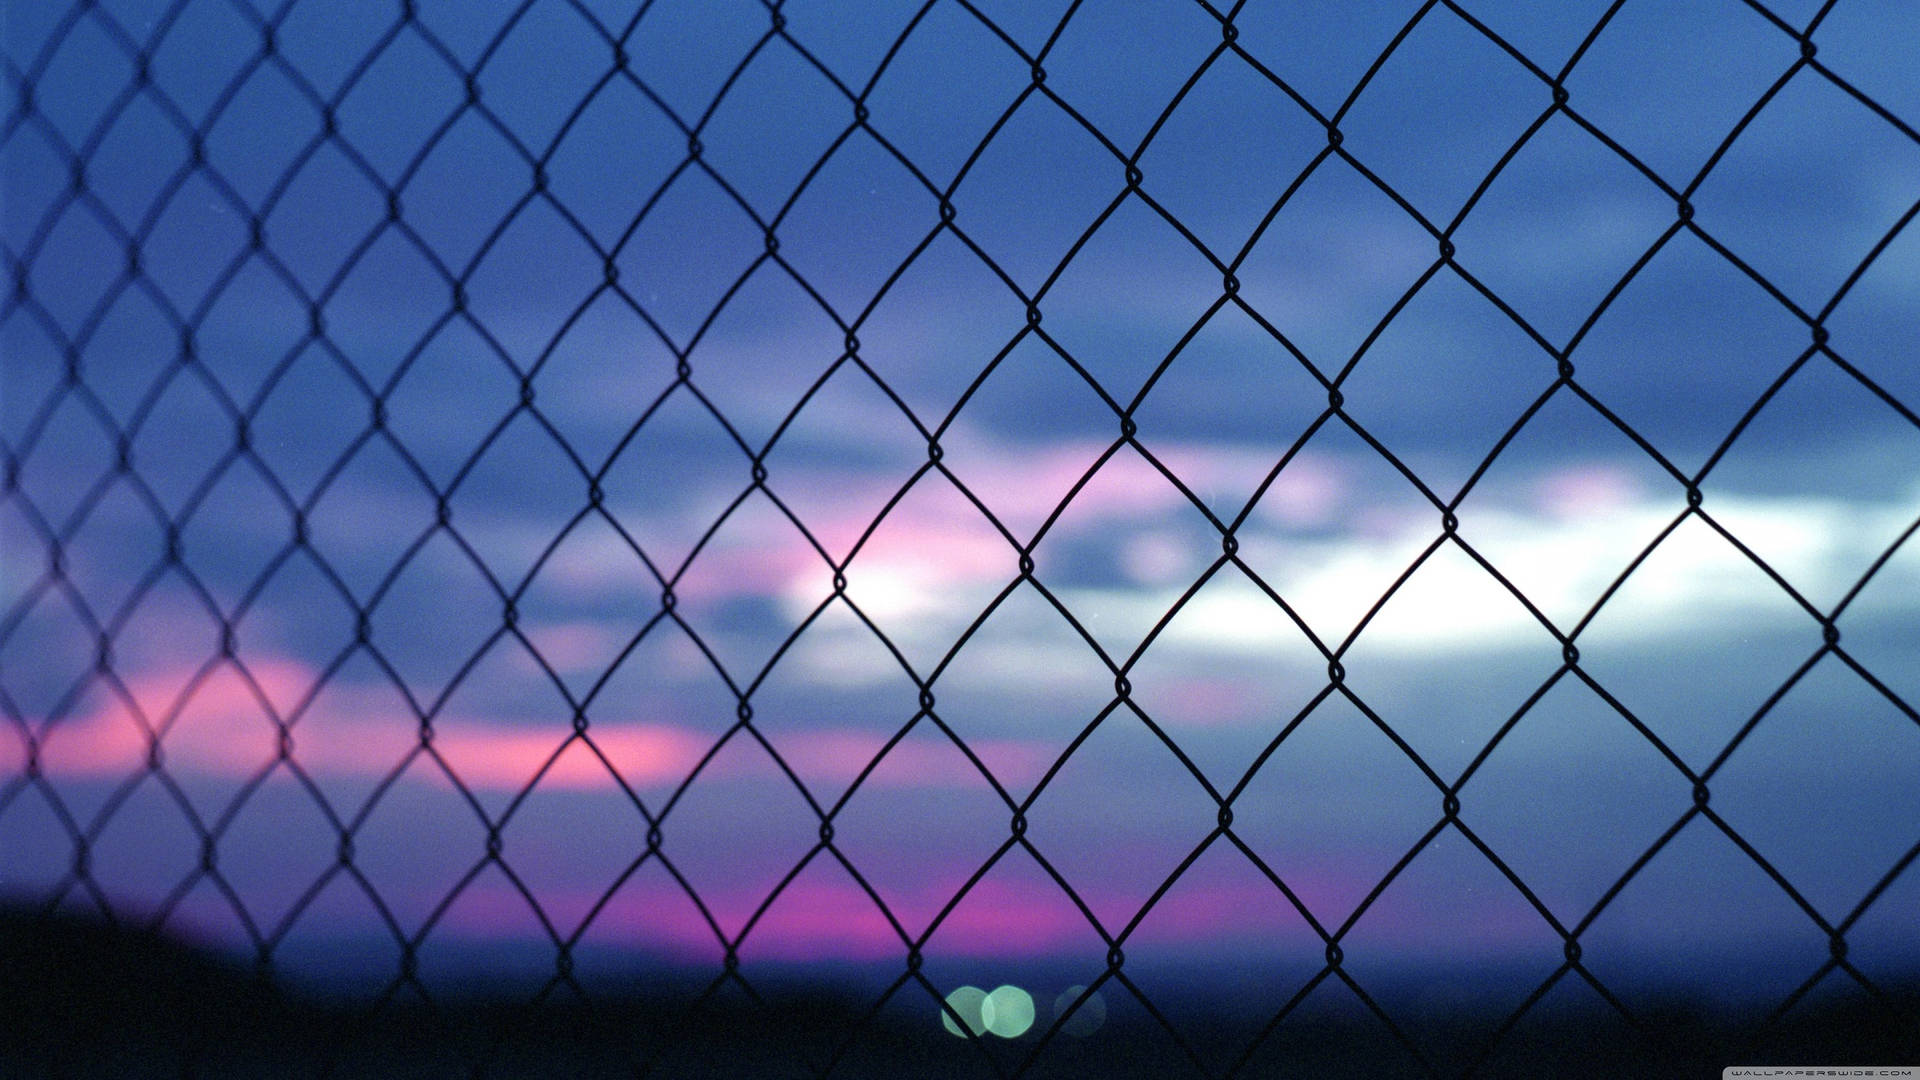 Aesthetic Tumblr Sky Behind Fence